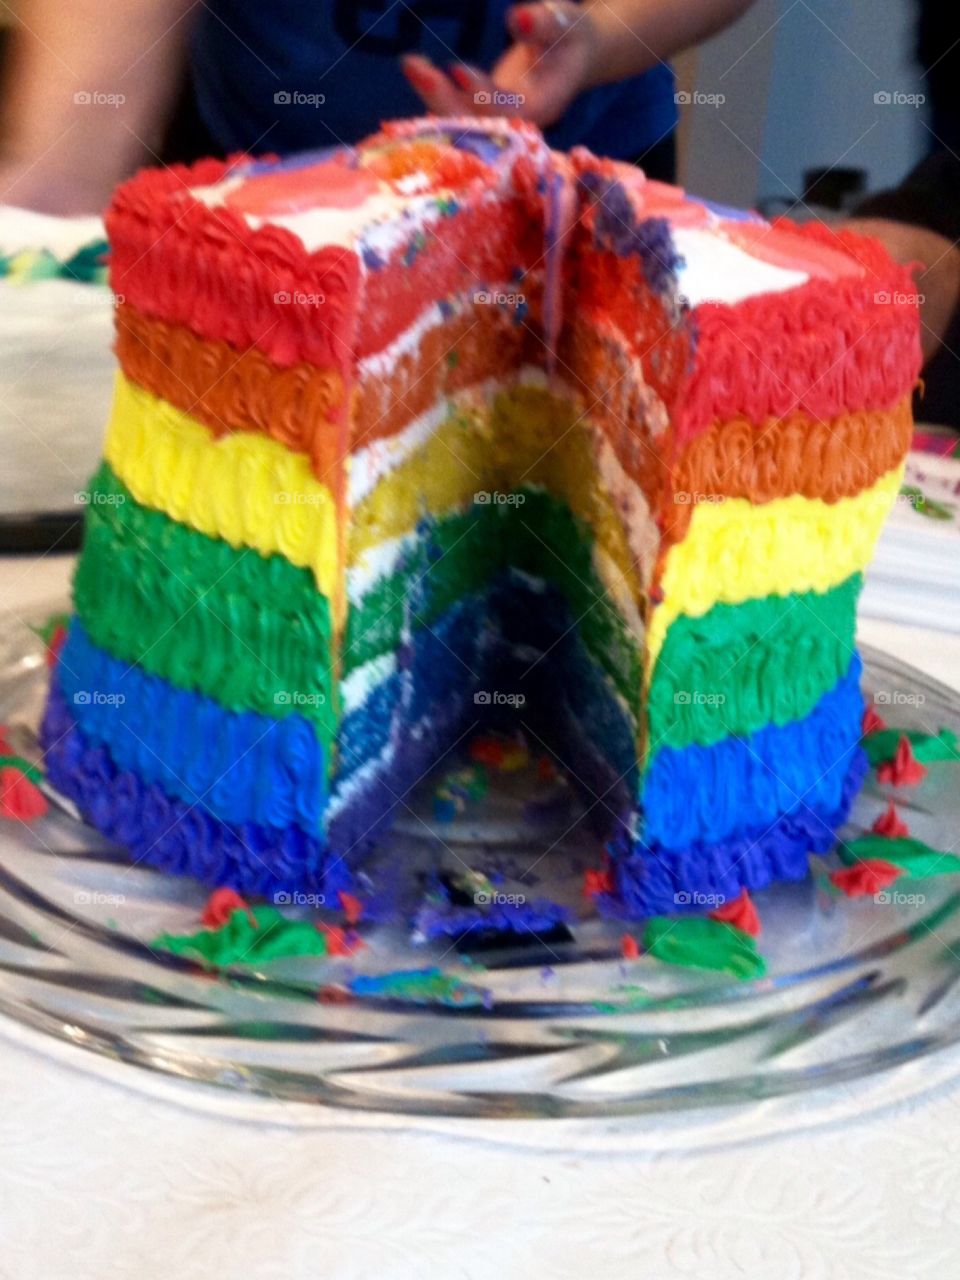 Colorful birthday cake 